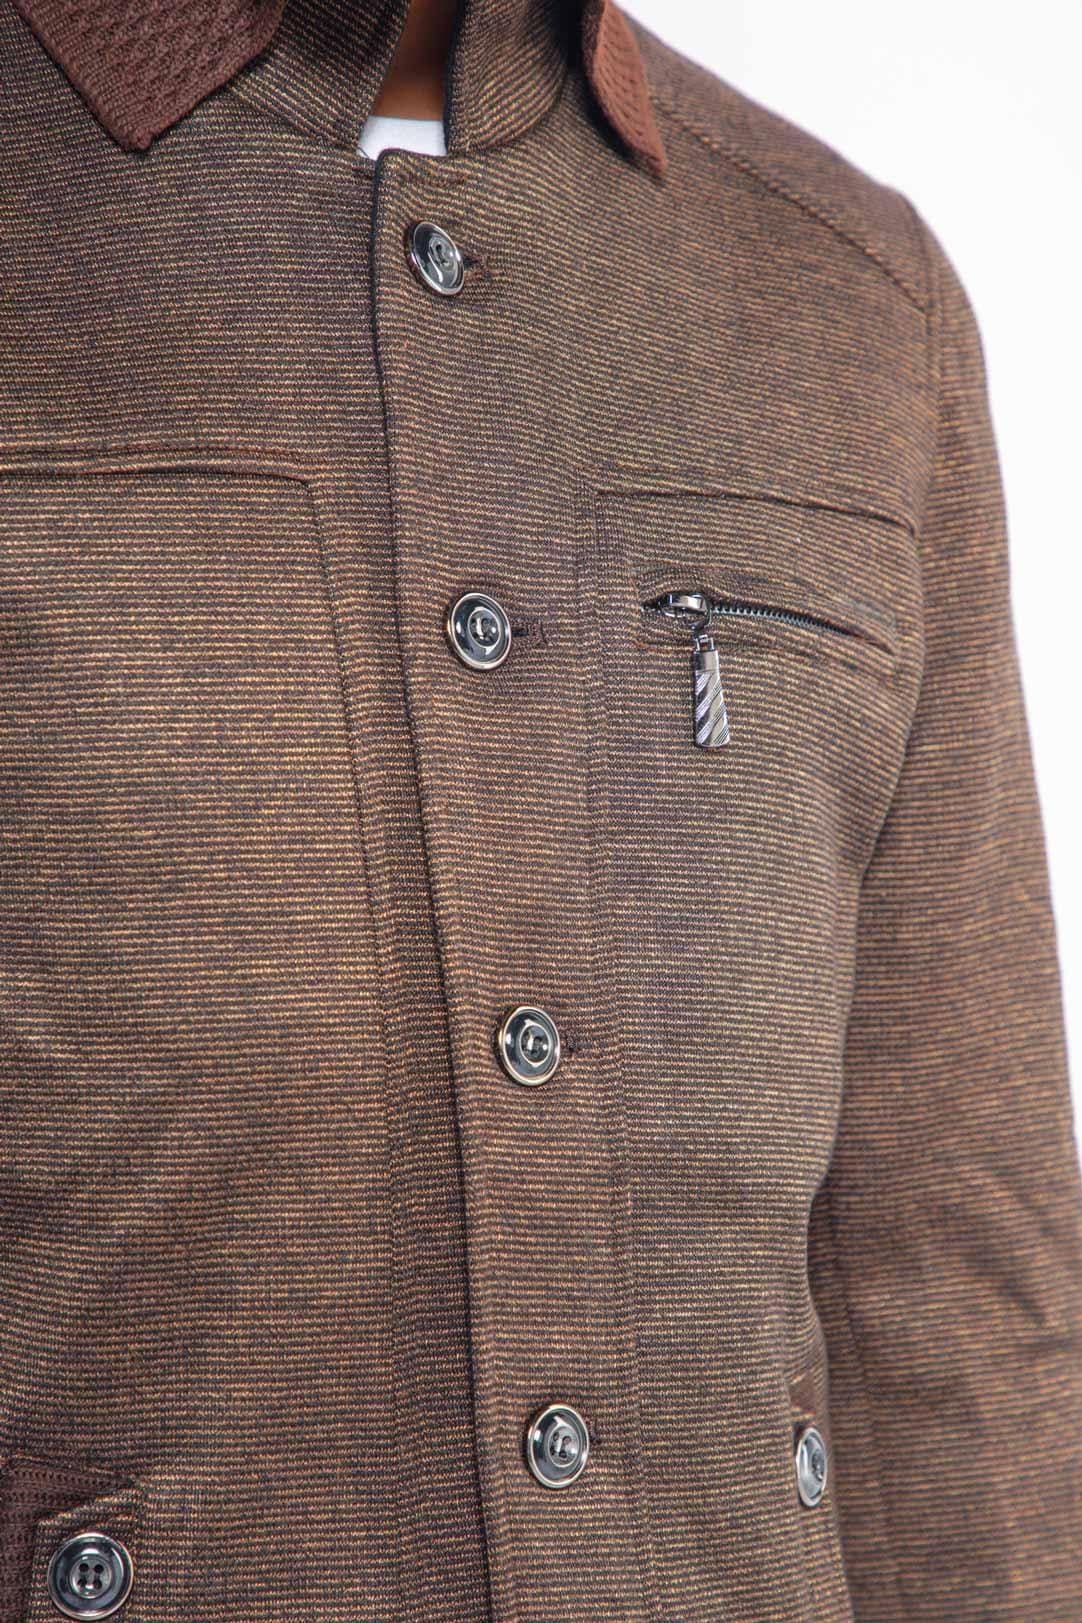 DIMAN MEN'S JACKET, Coats & Jackets, CORADO, brown, jacket, men, top, coradomoda, coradomoda.com